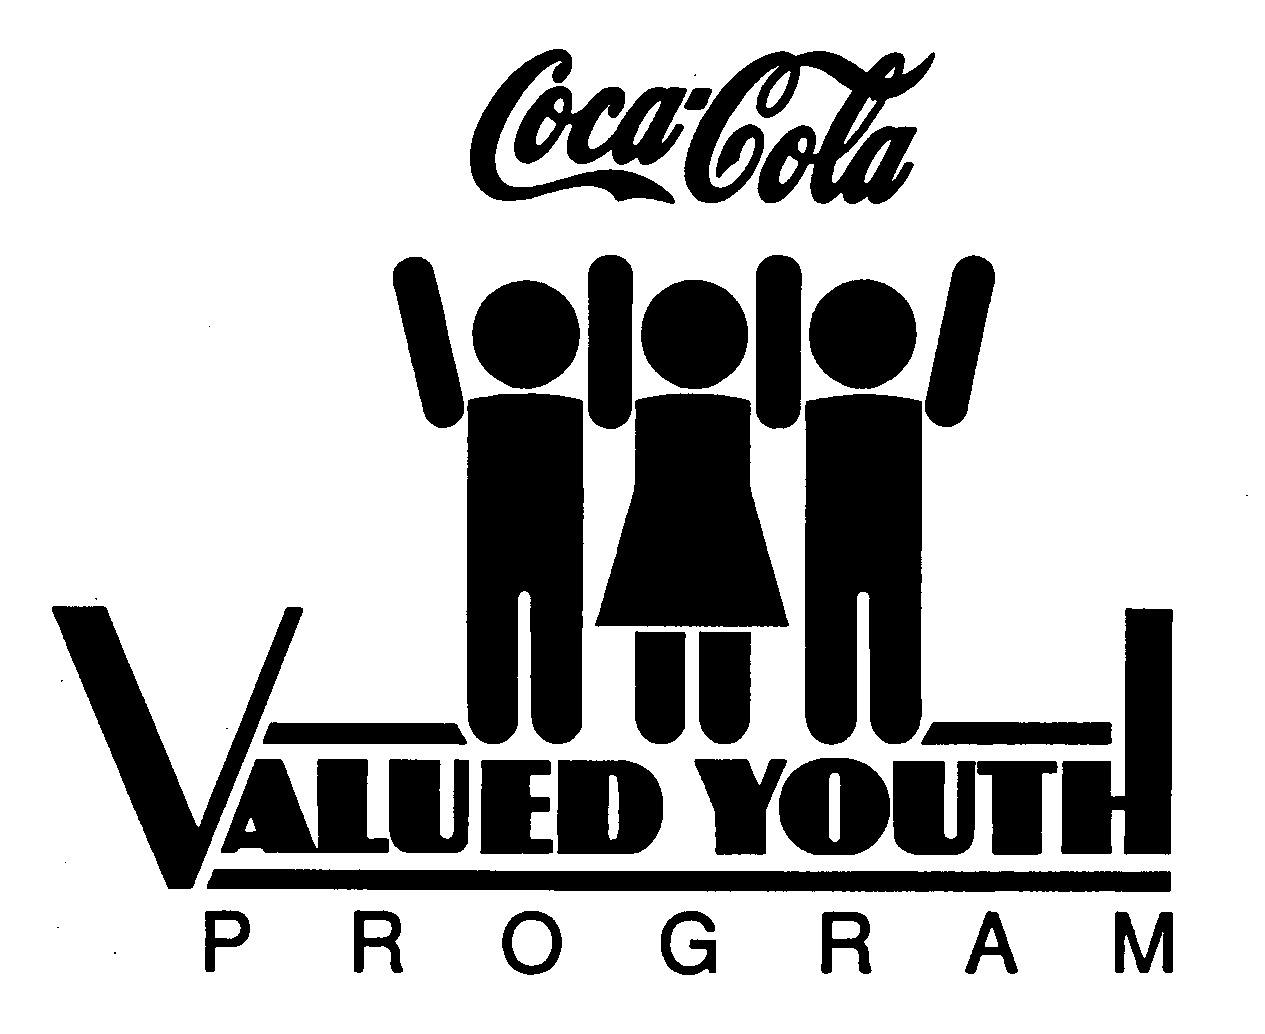  COCA-COLA VALUED YOUTH PROGRAM